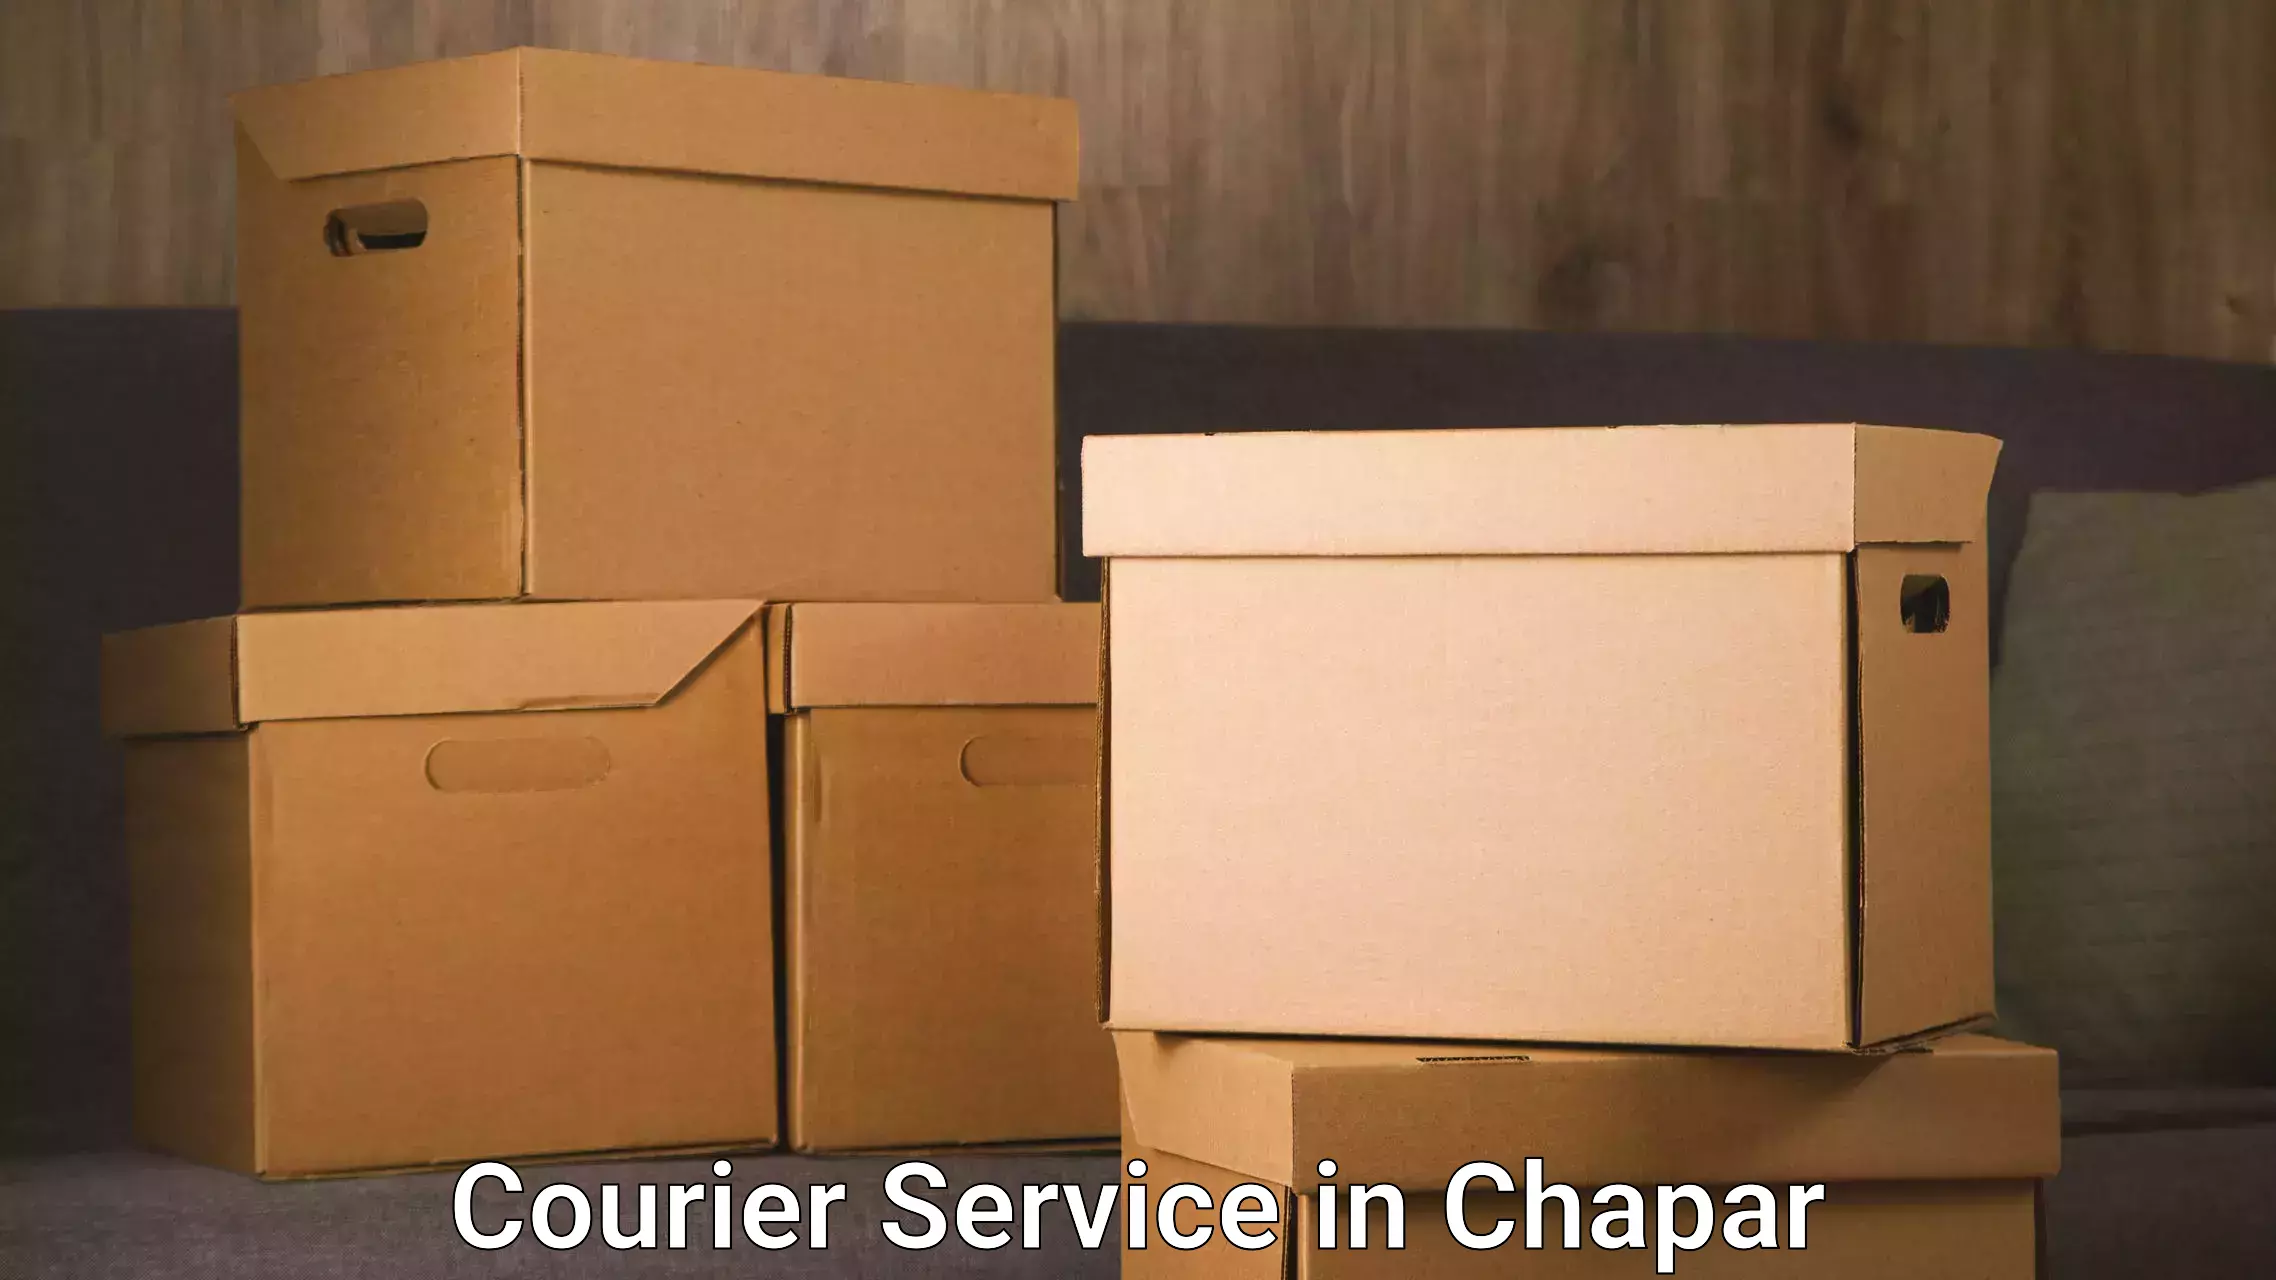 Expedited parcel delivery in Chapar